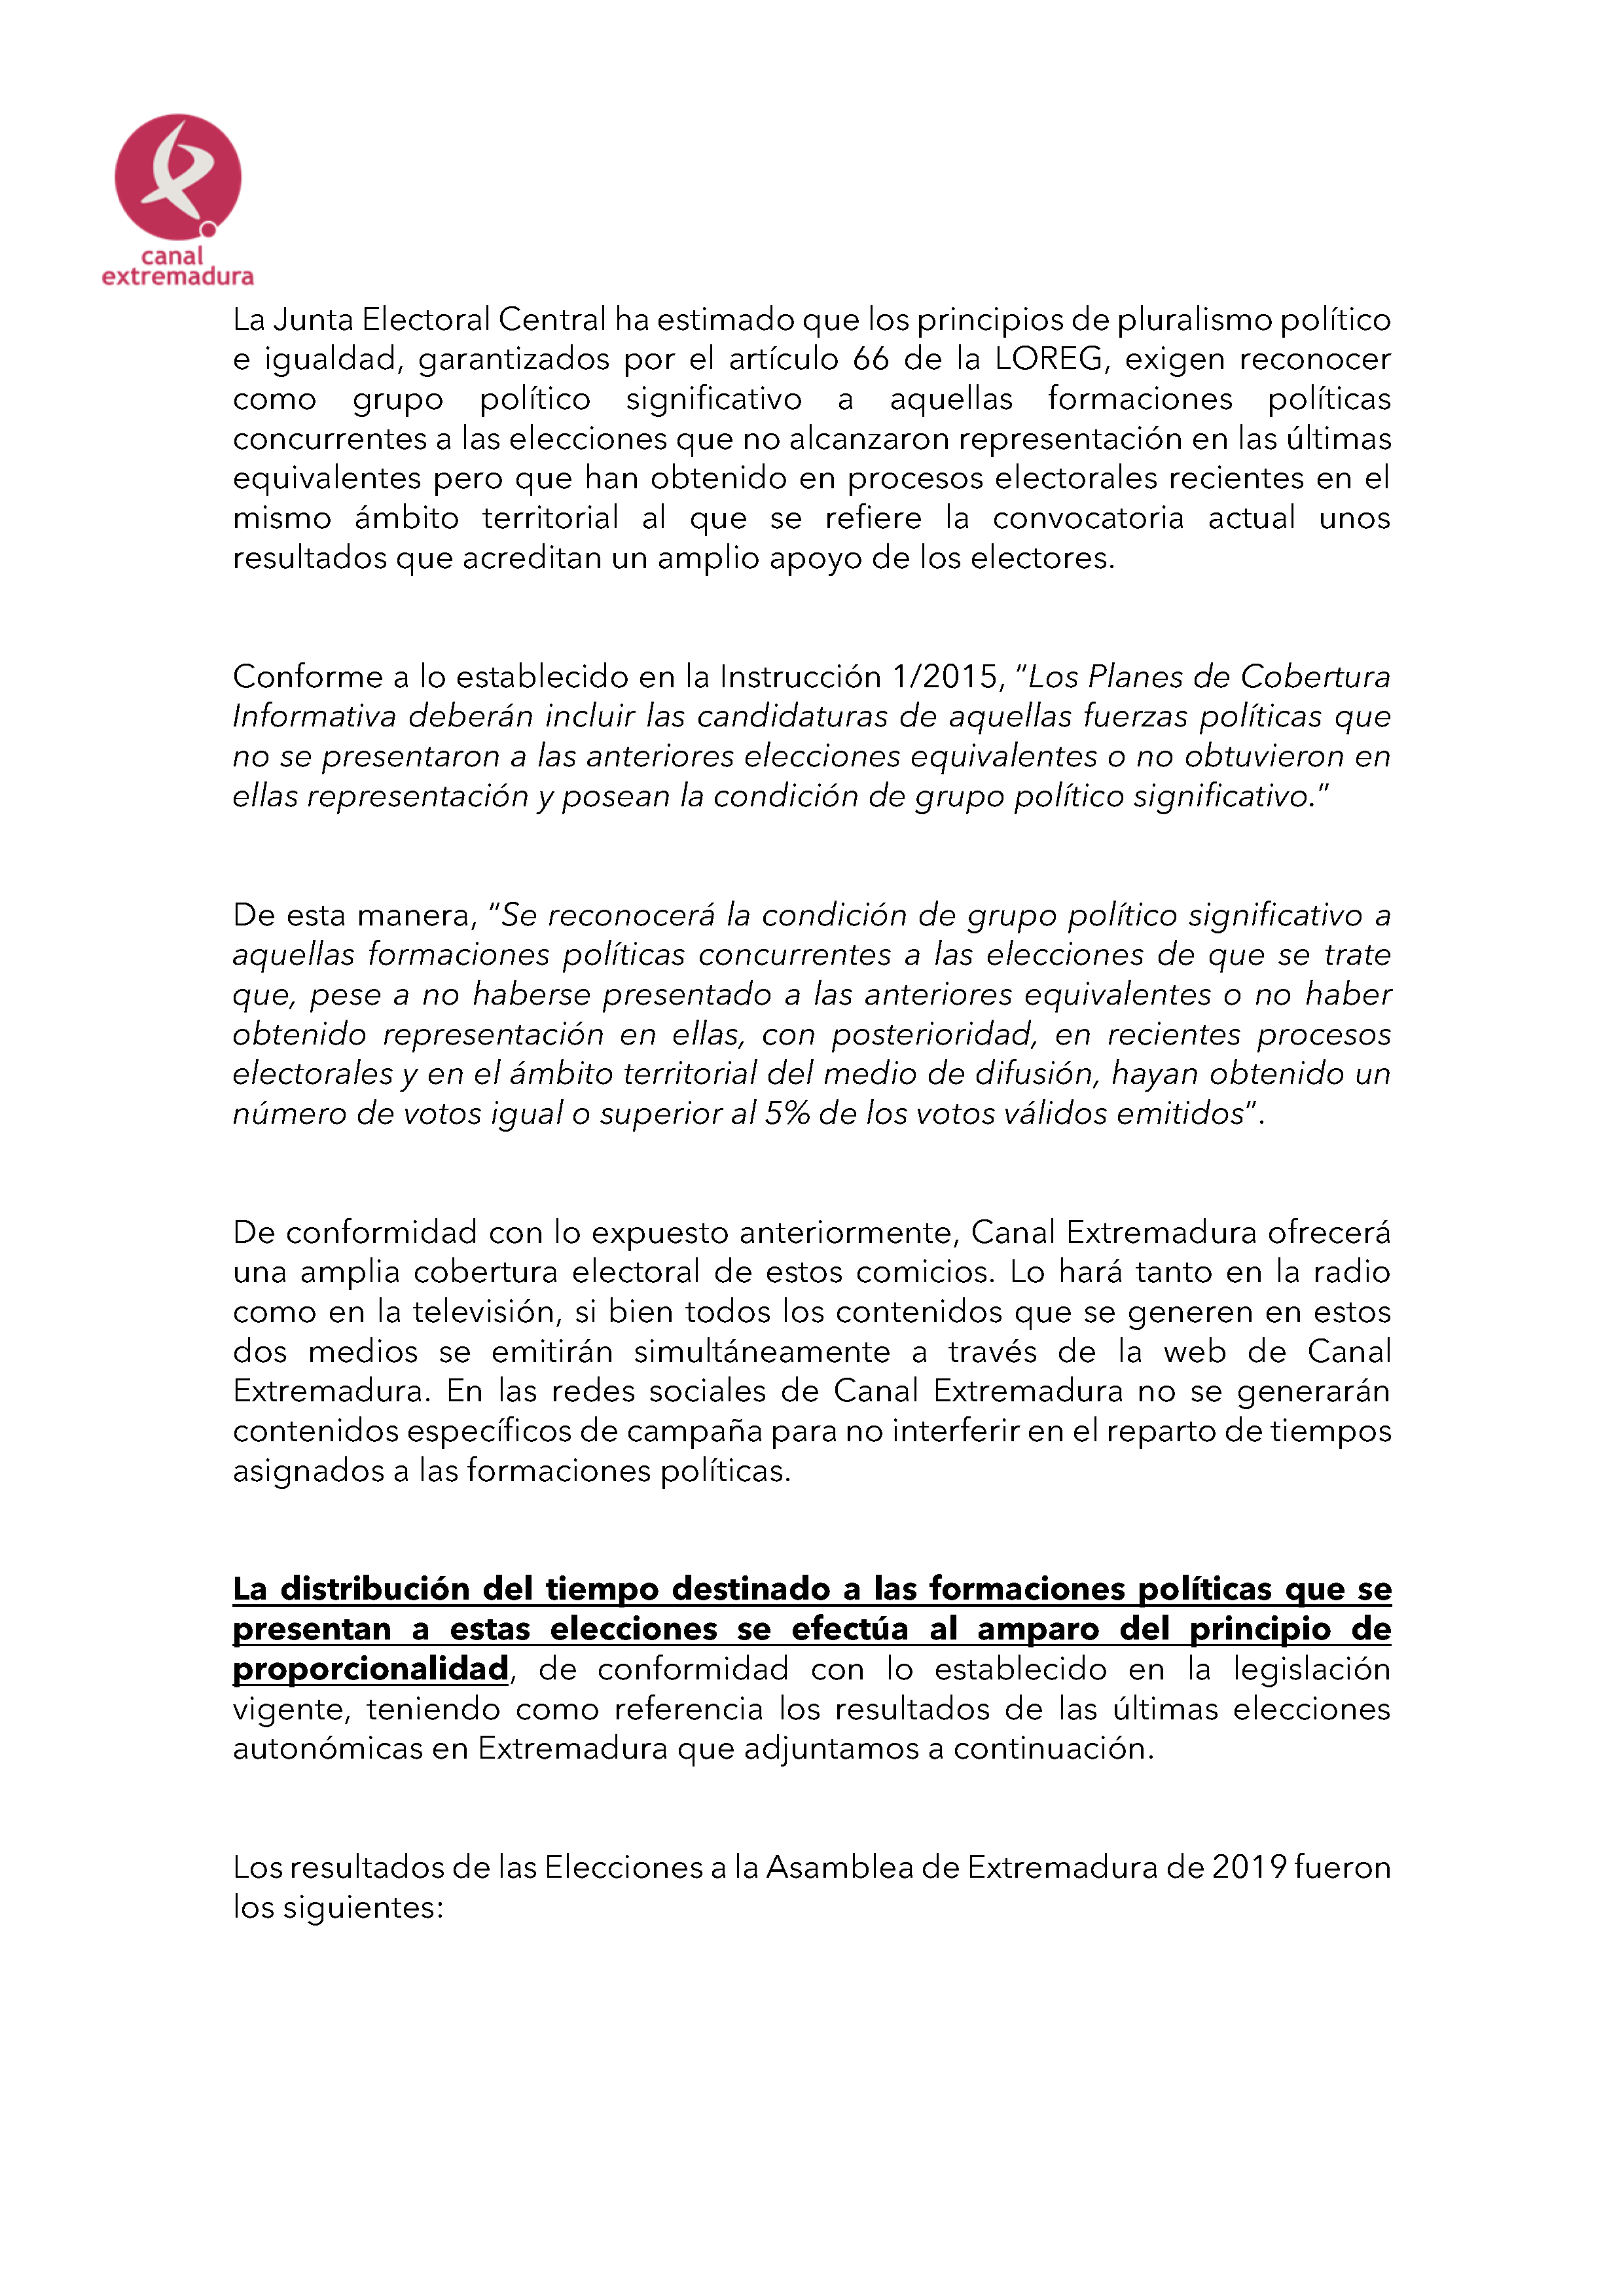 PLAN DE COBERTURA INFORMATIVA DE CANAL EXTREMADURA Pag 3